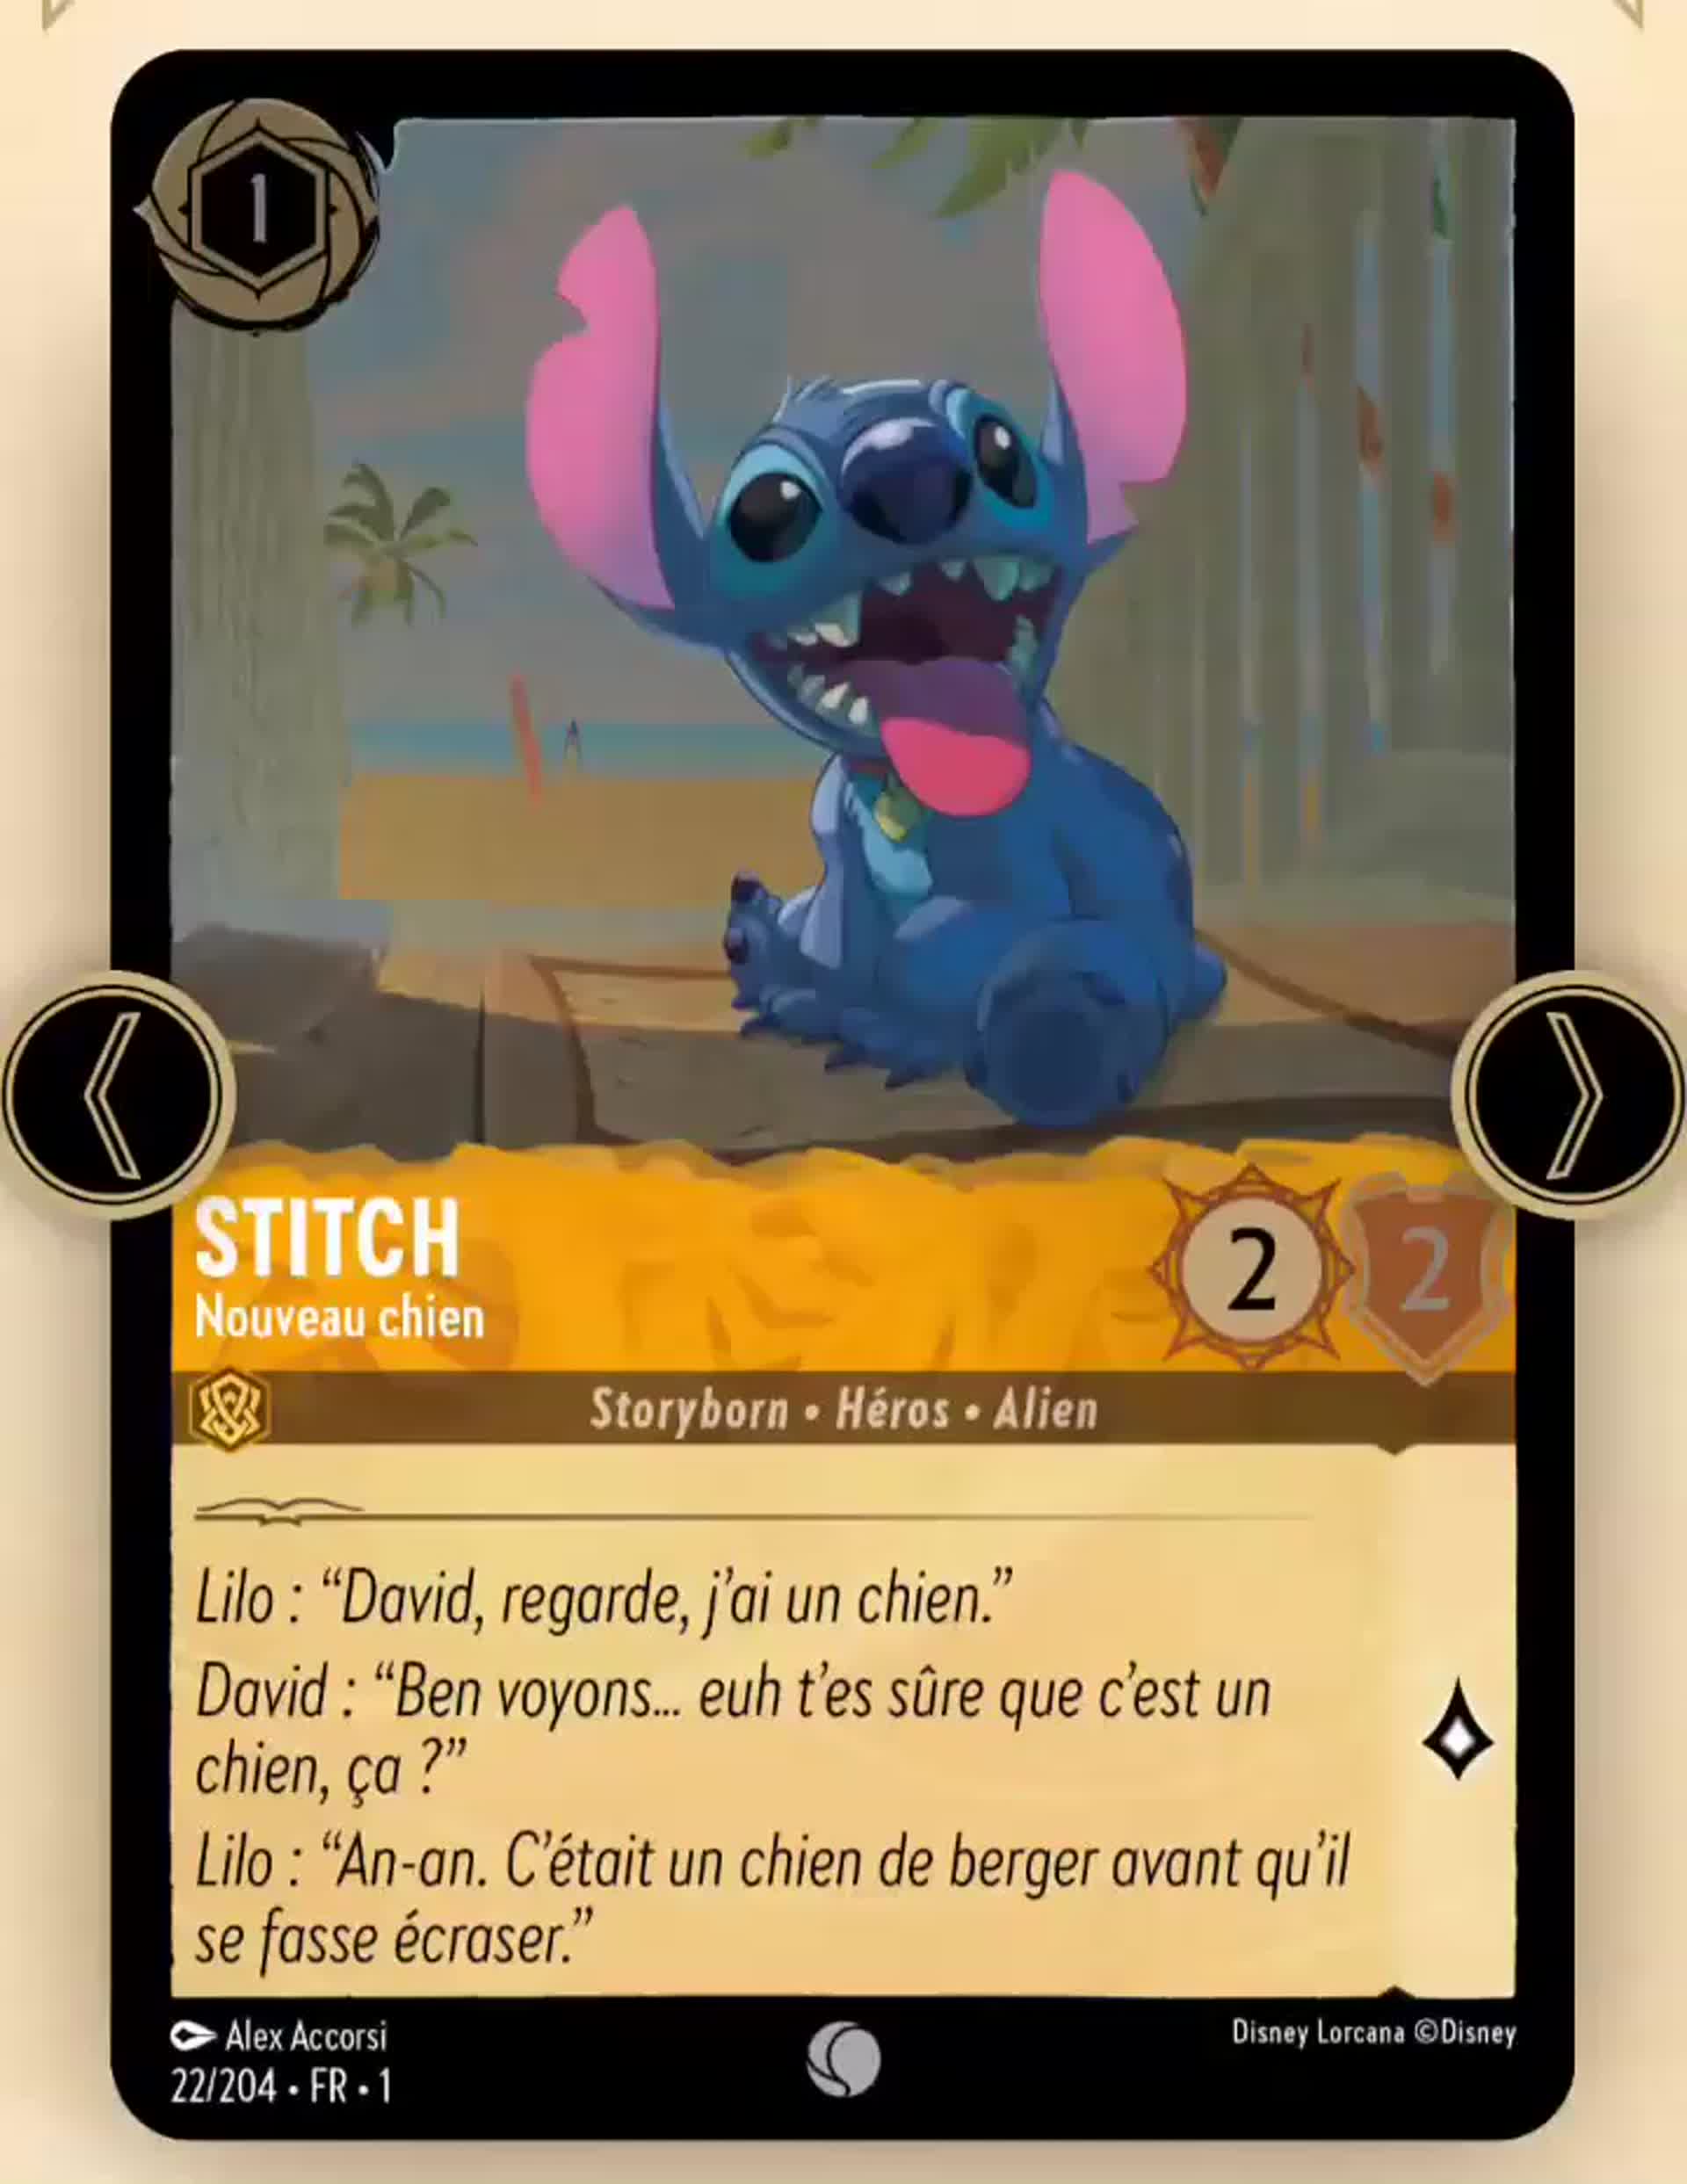 Disney Lorcana TCG : Carte Stitch (22/204)